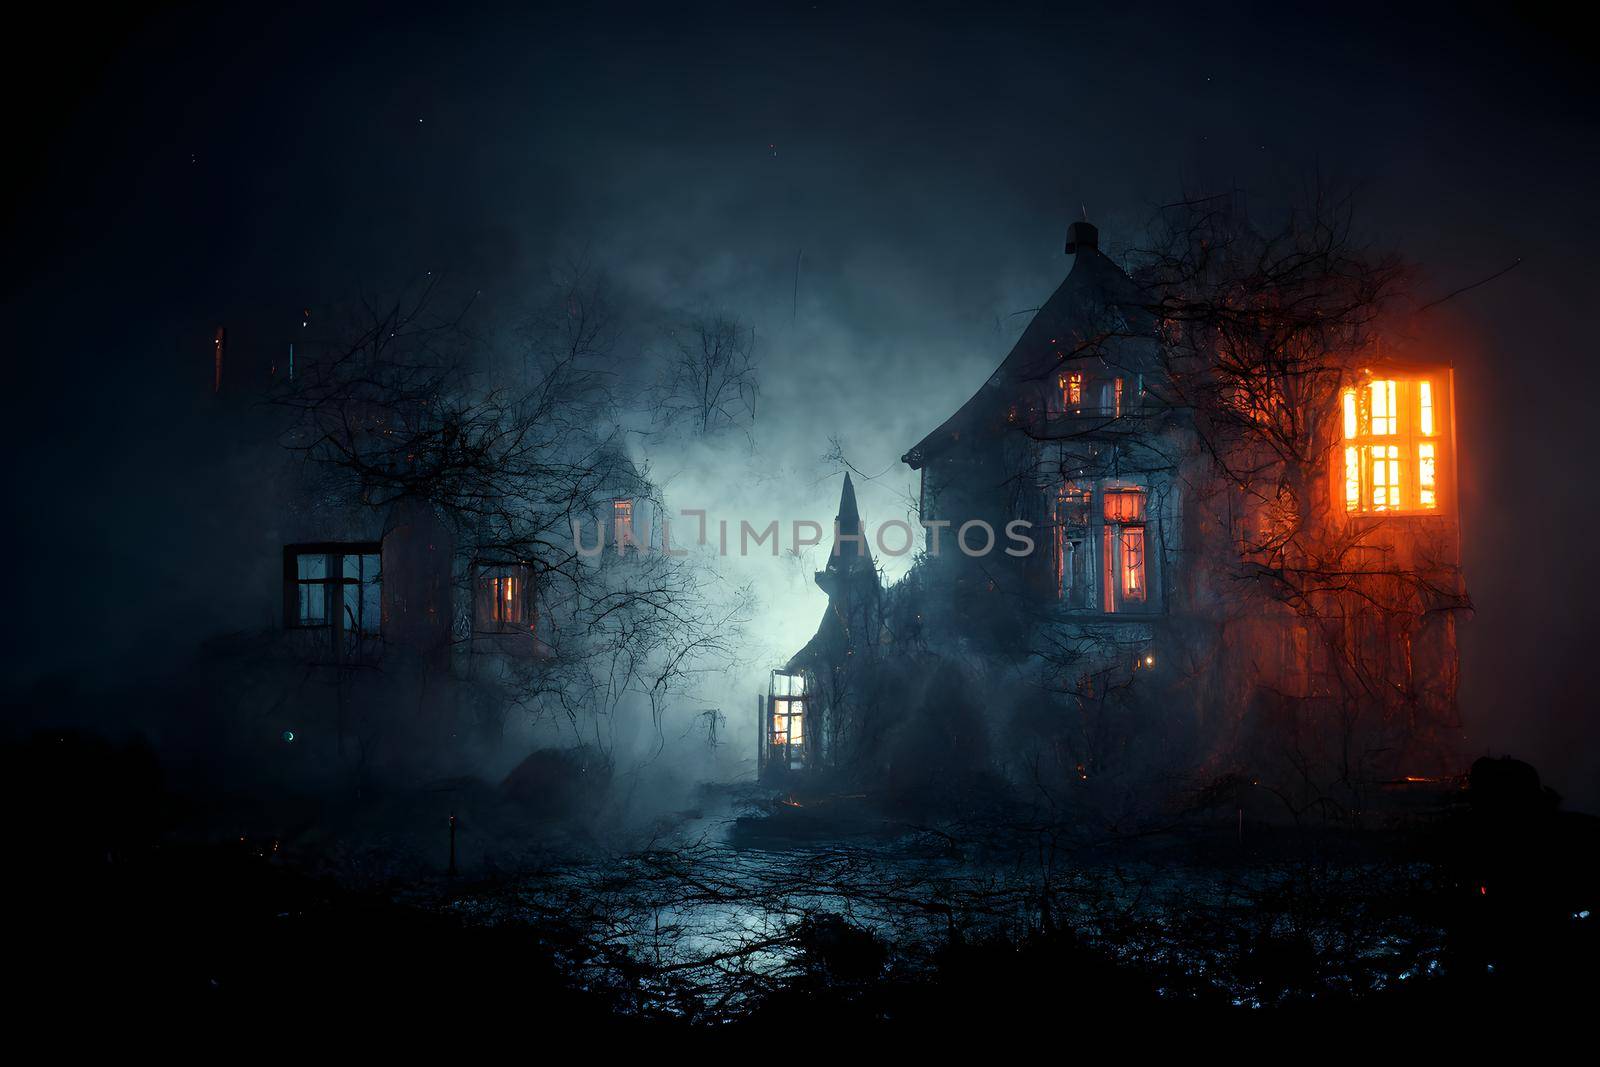 dark haunted house with illuminated windows at spooky misty dark halloween night, neural network generated art by z1b